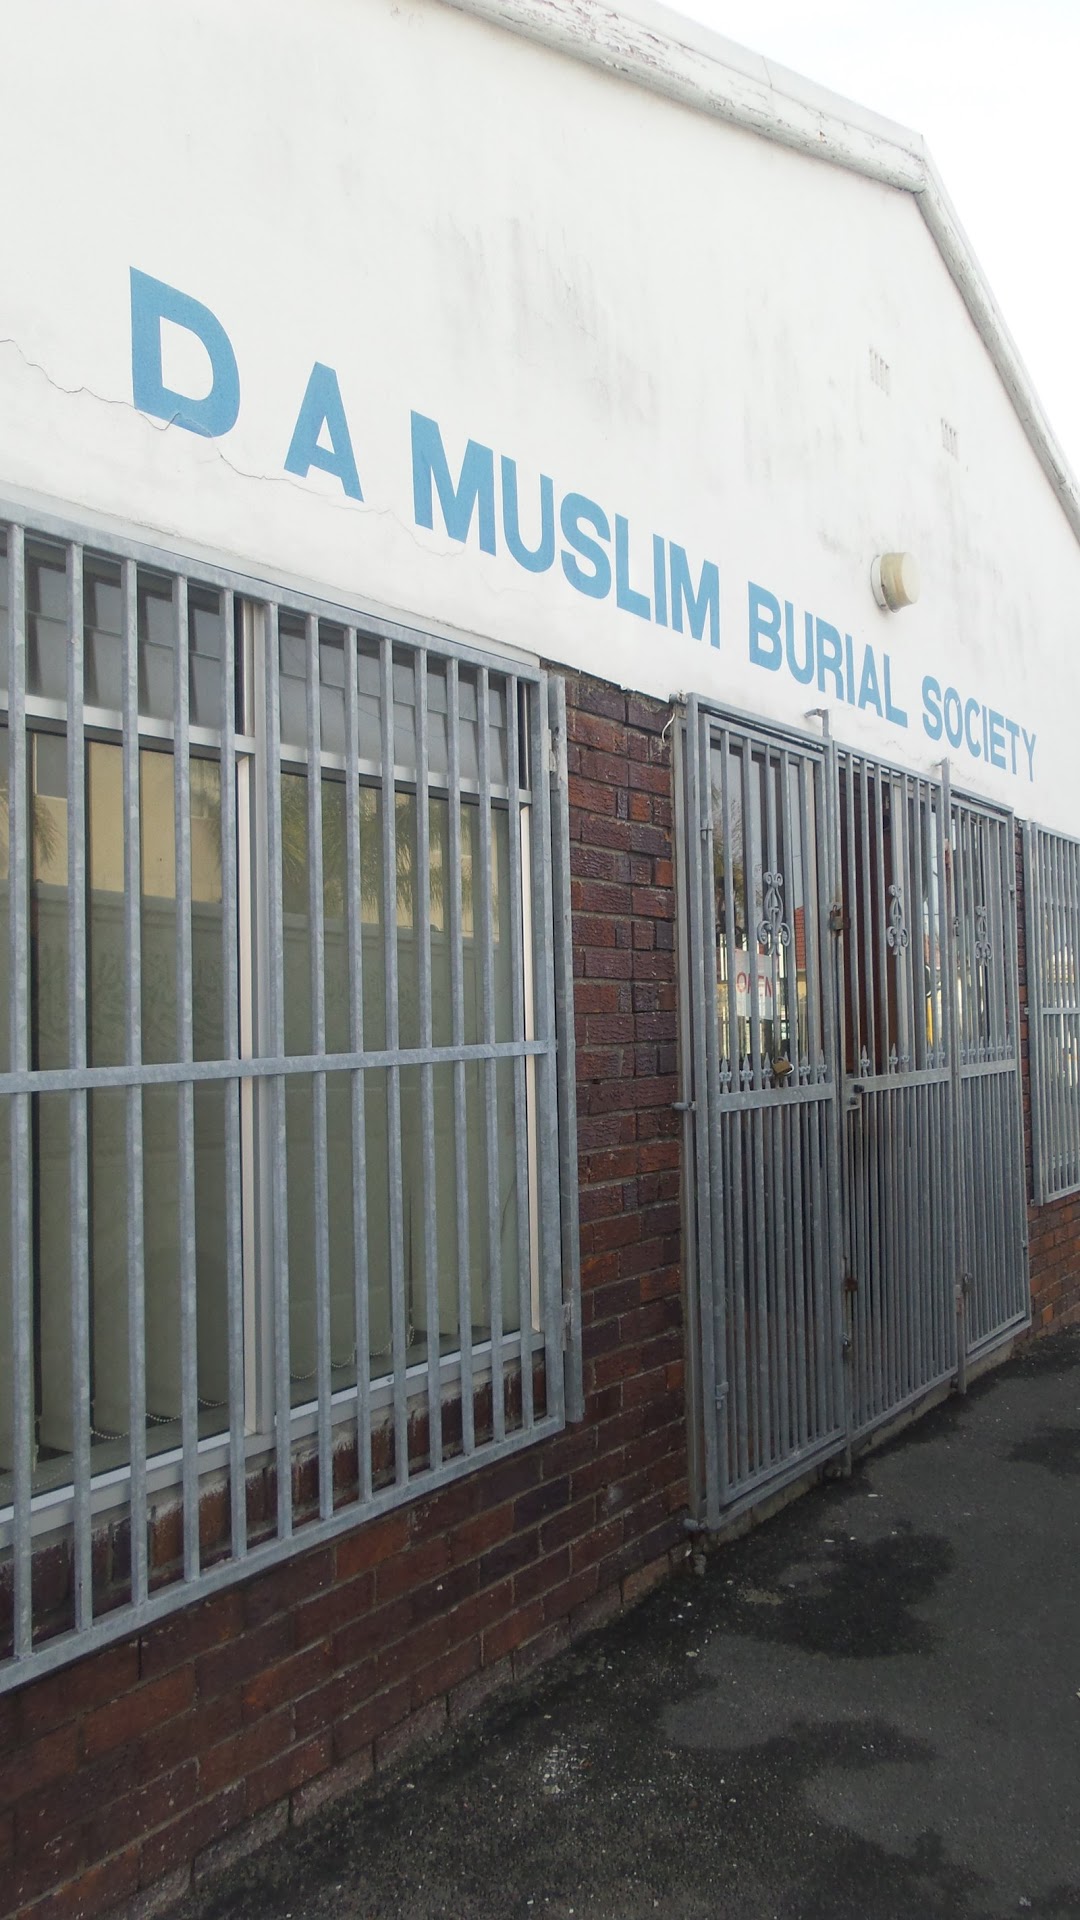 D A Muslim Burial Society